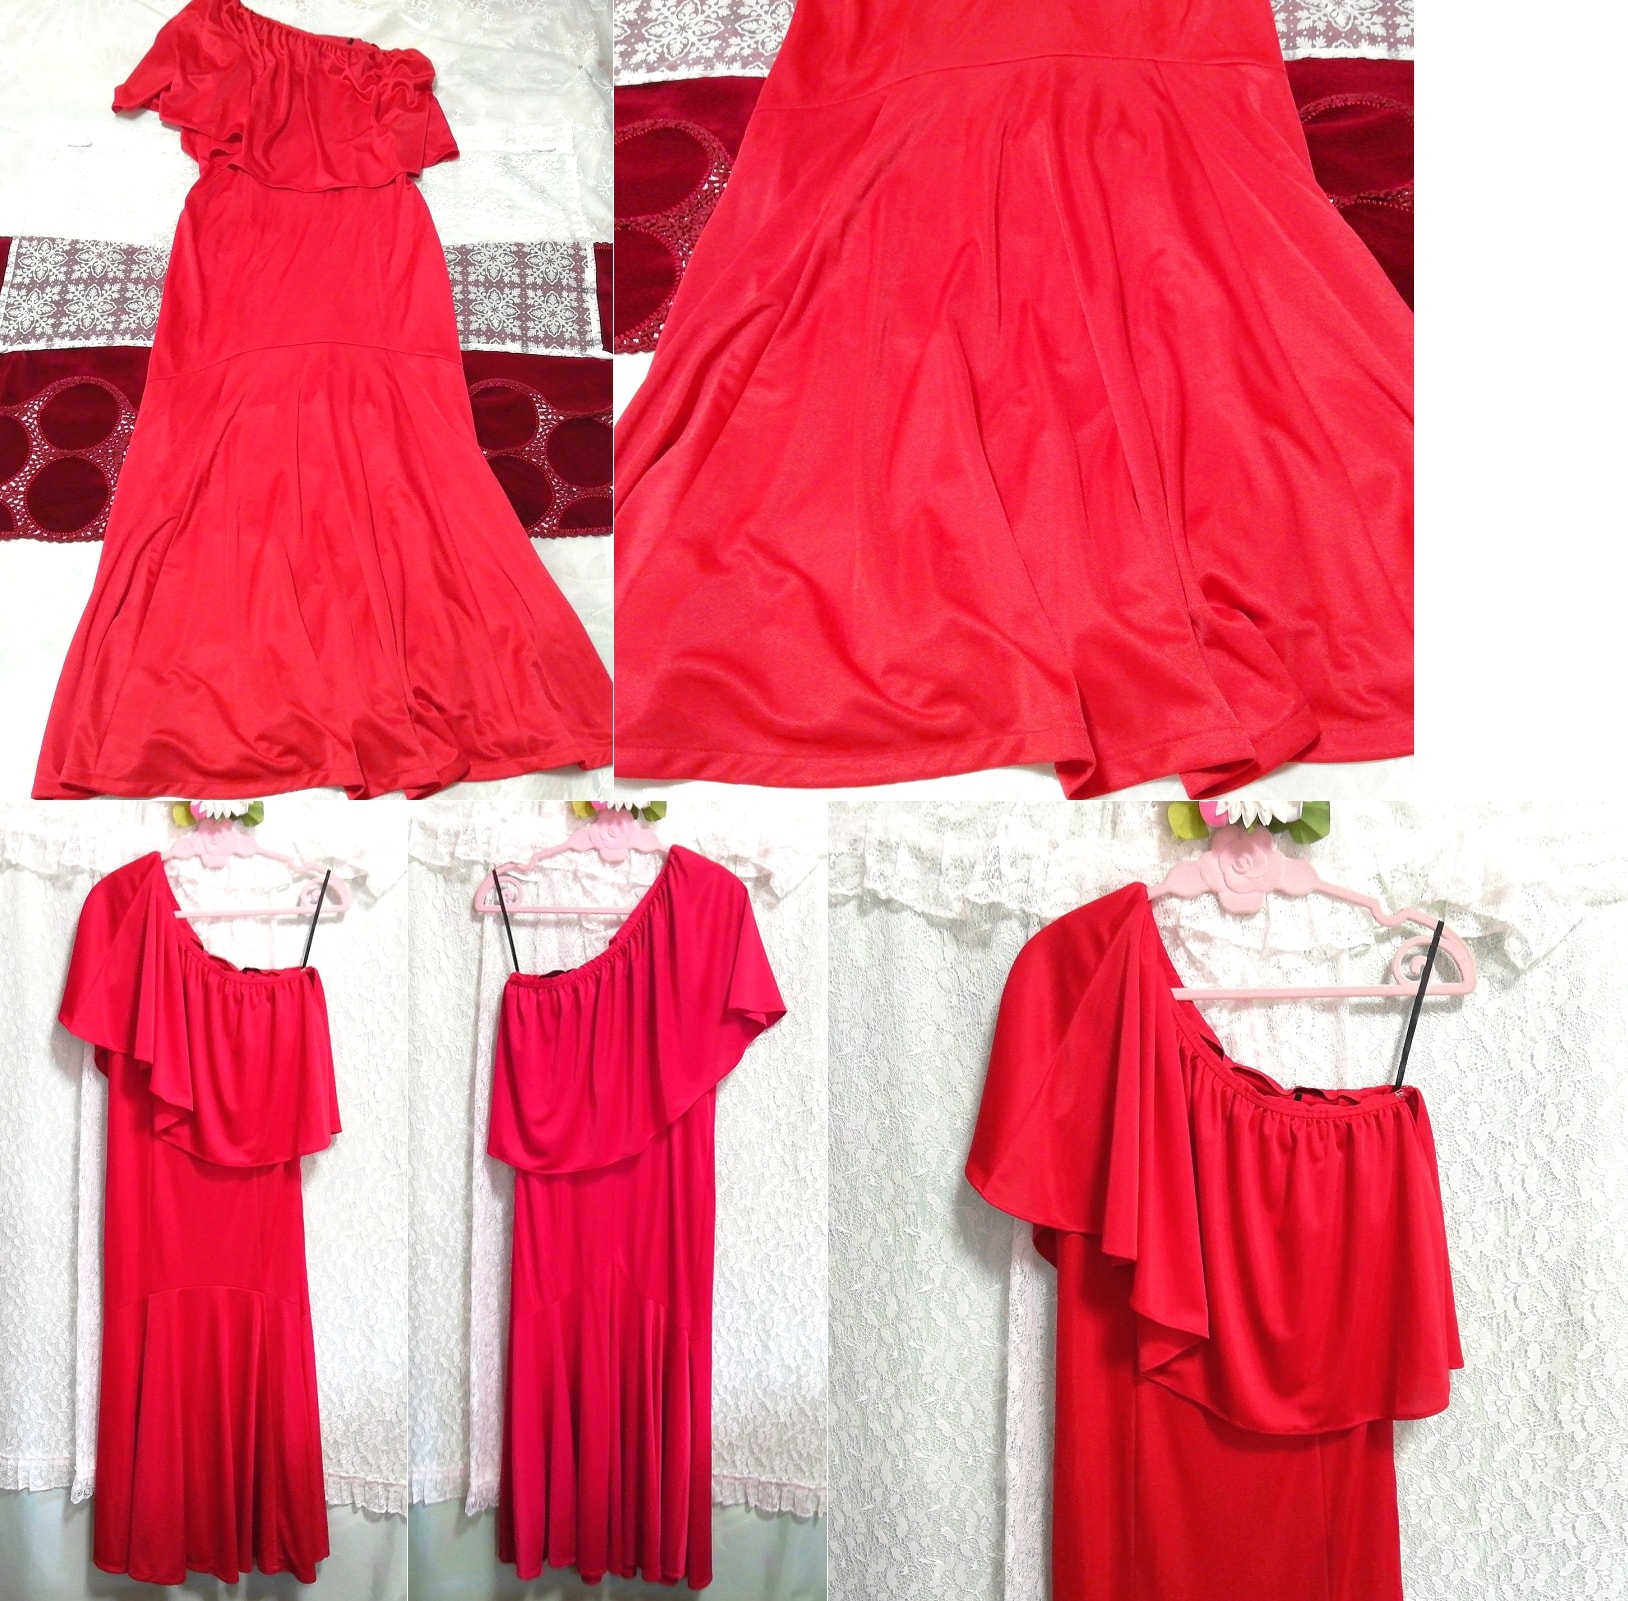 Red maxi robe negligee nightgown nightwear sleeveless one piece dress, fashion, ladies' fashion, nightwear, pajamas